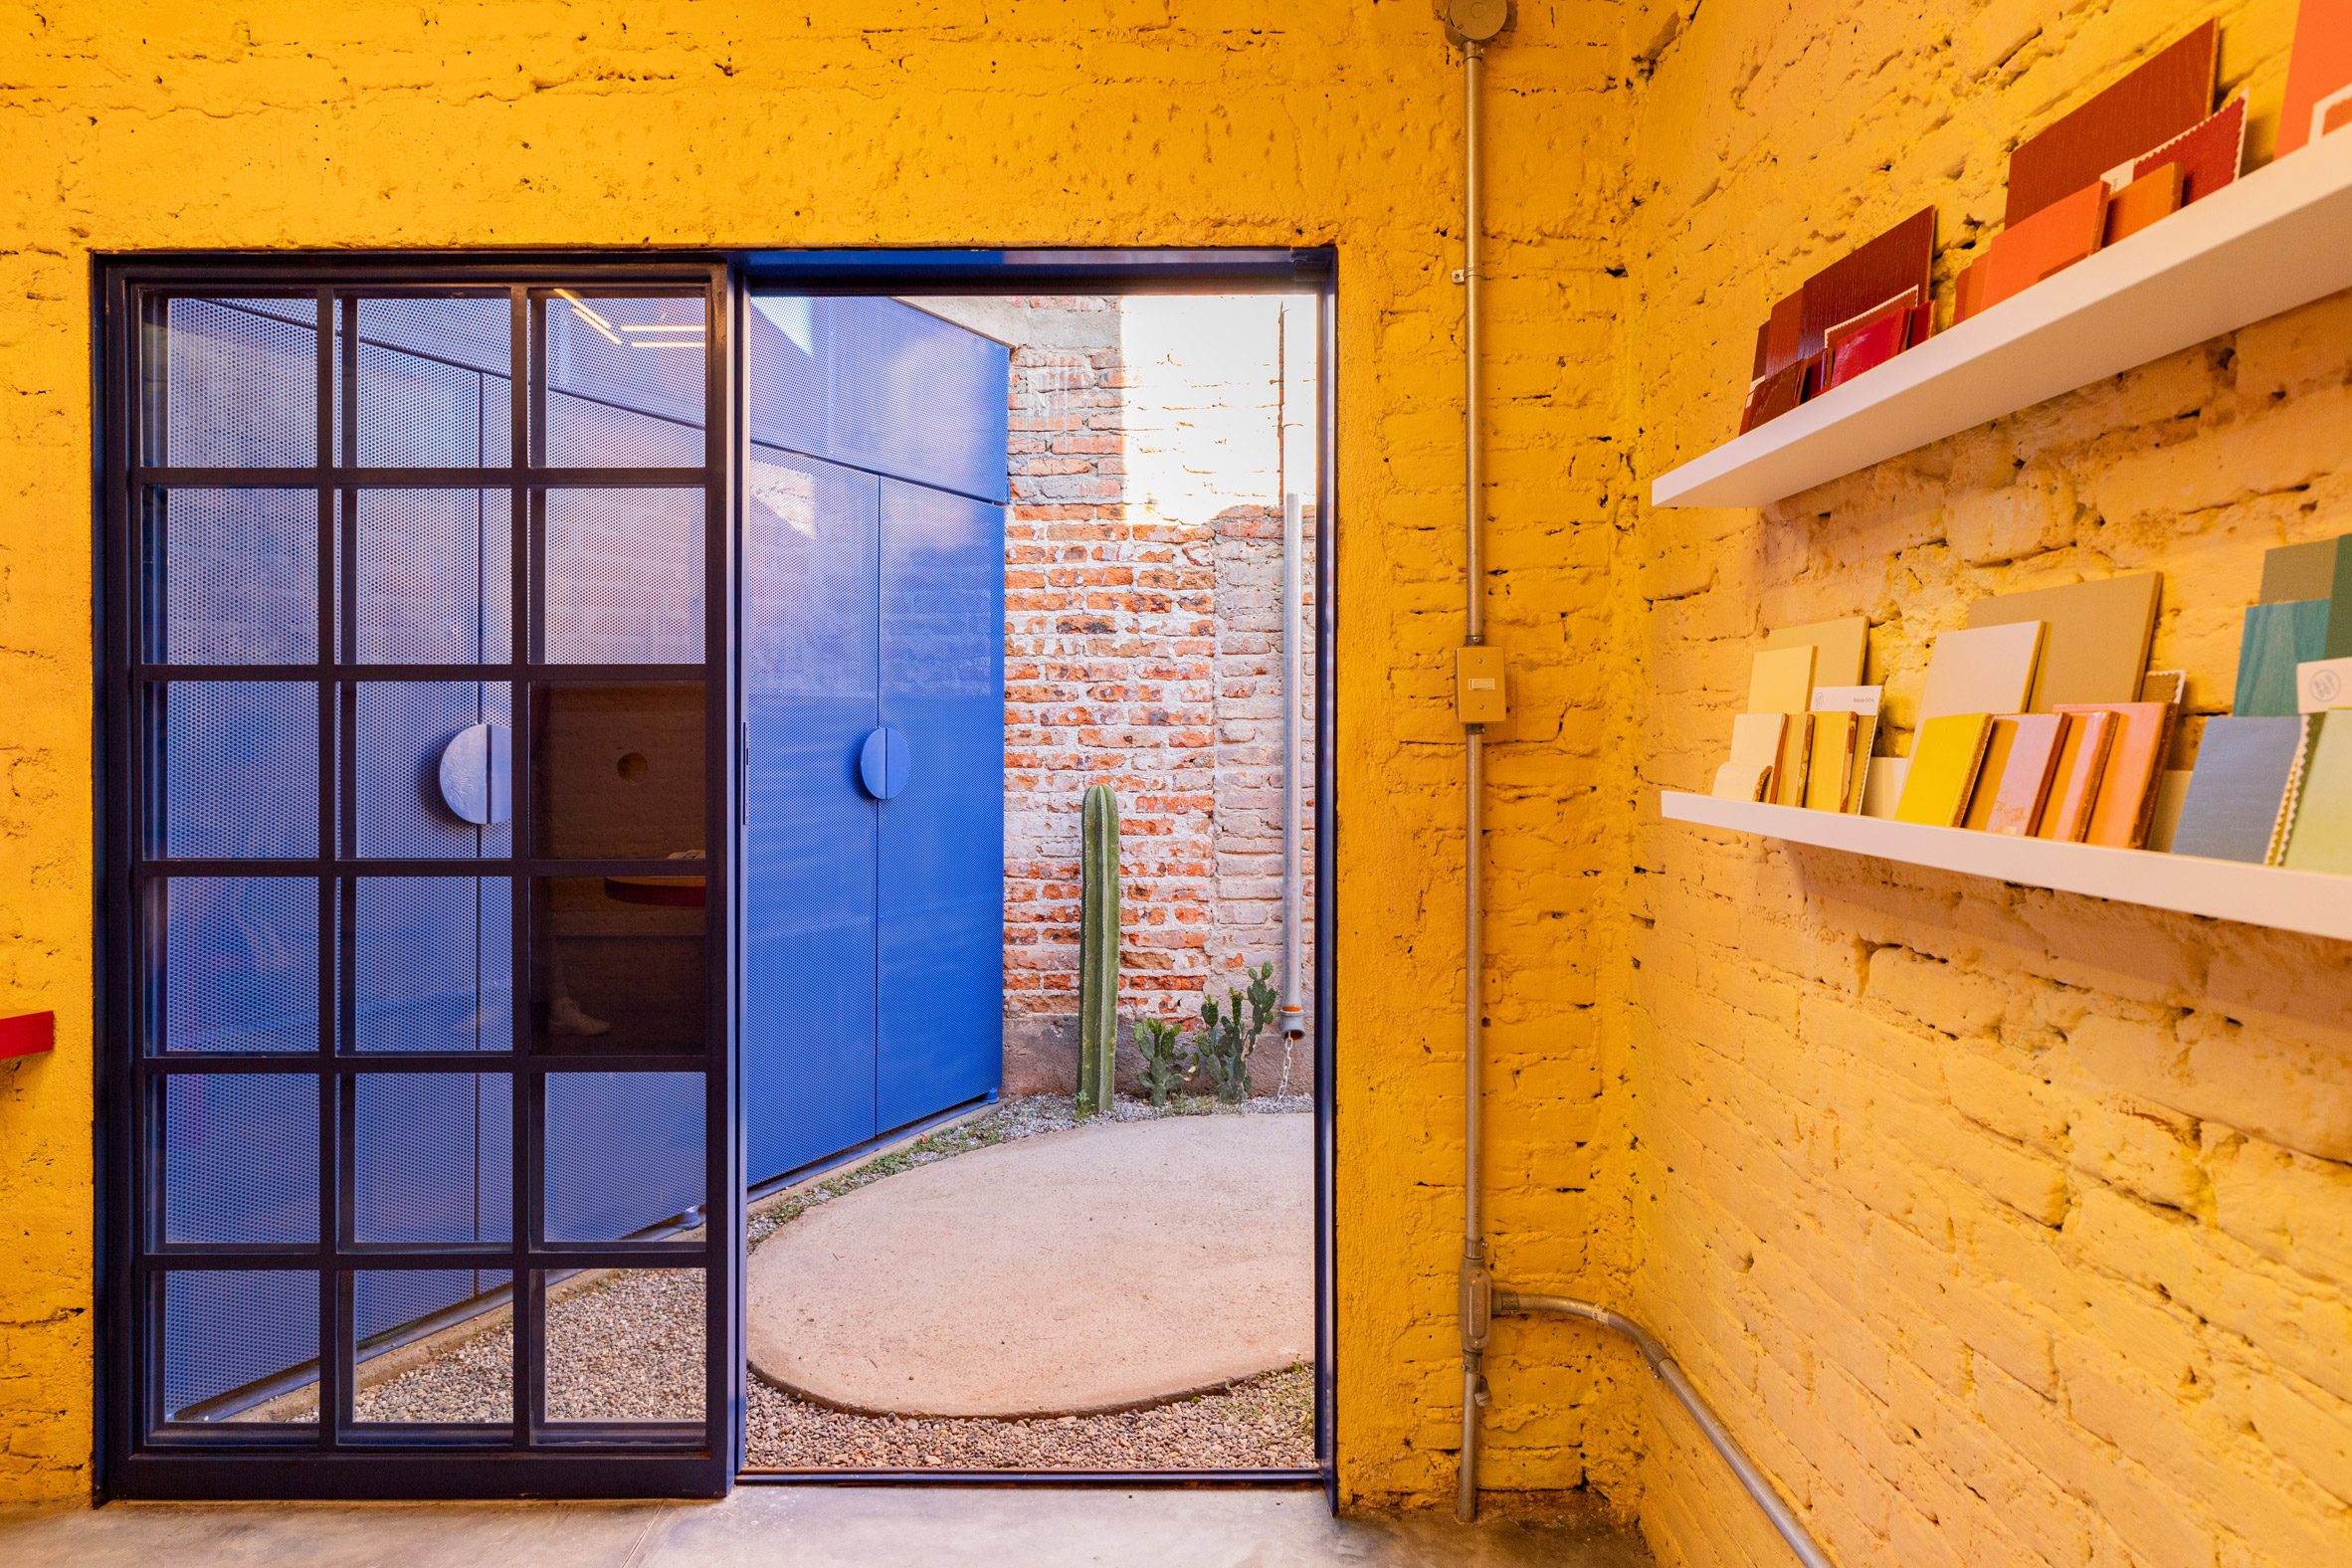 Yellow walls facing a blue colored door